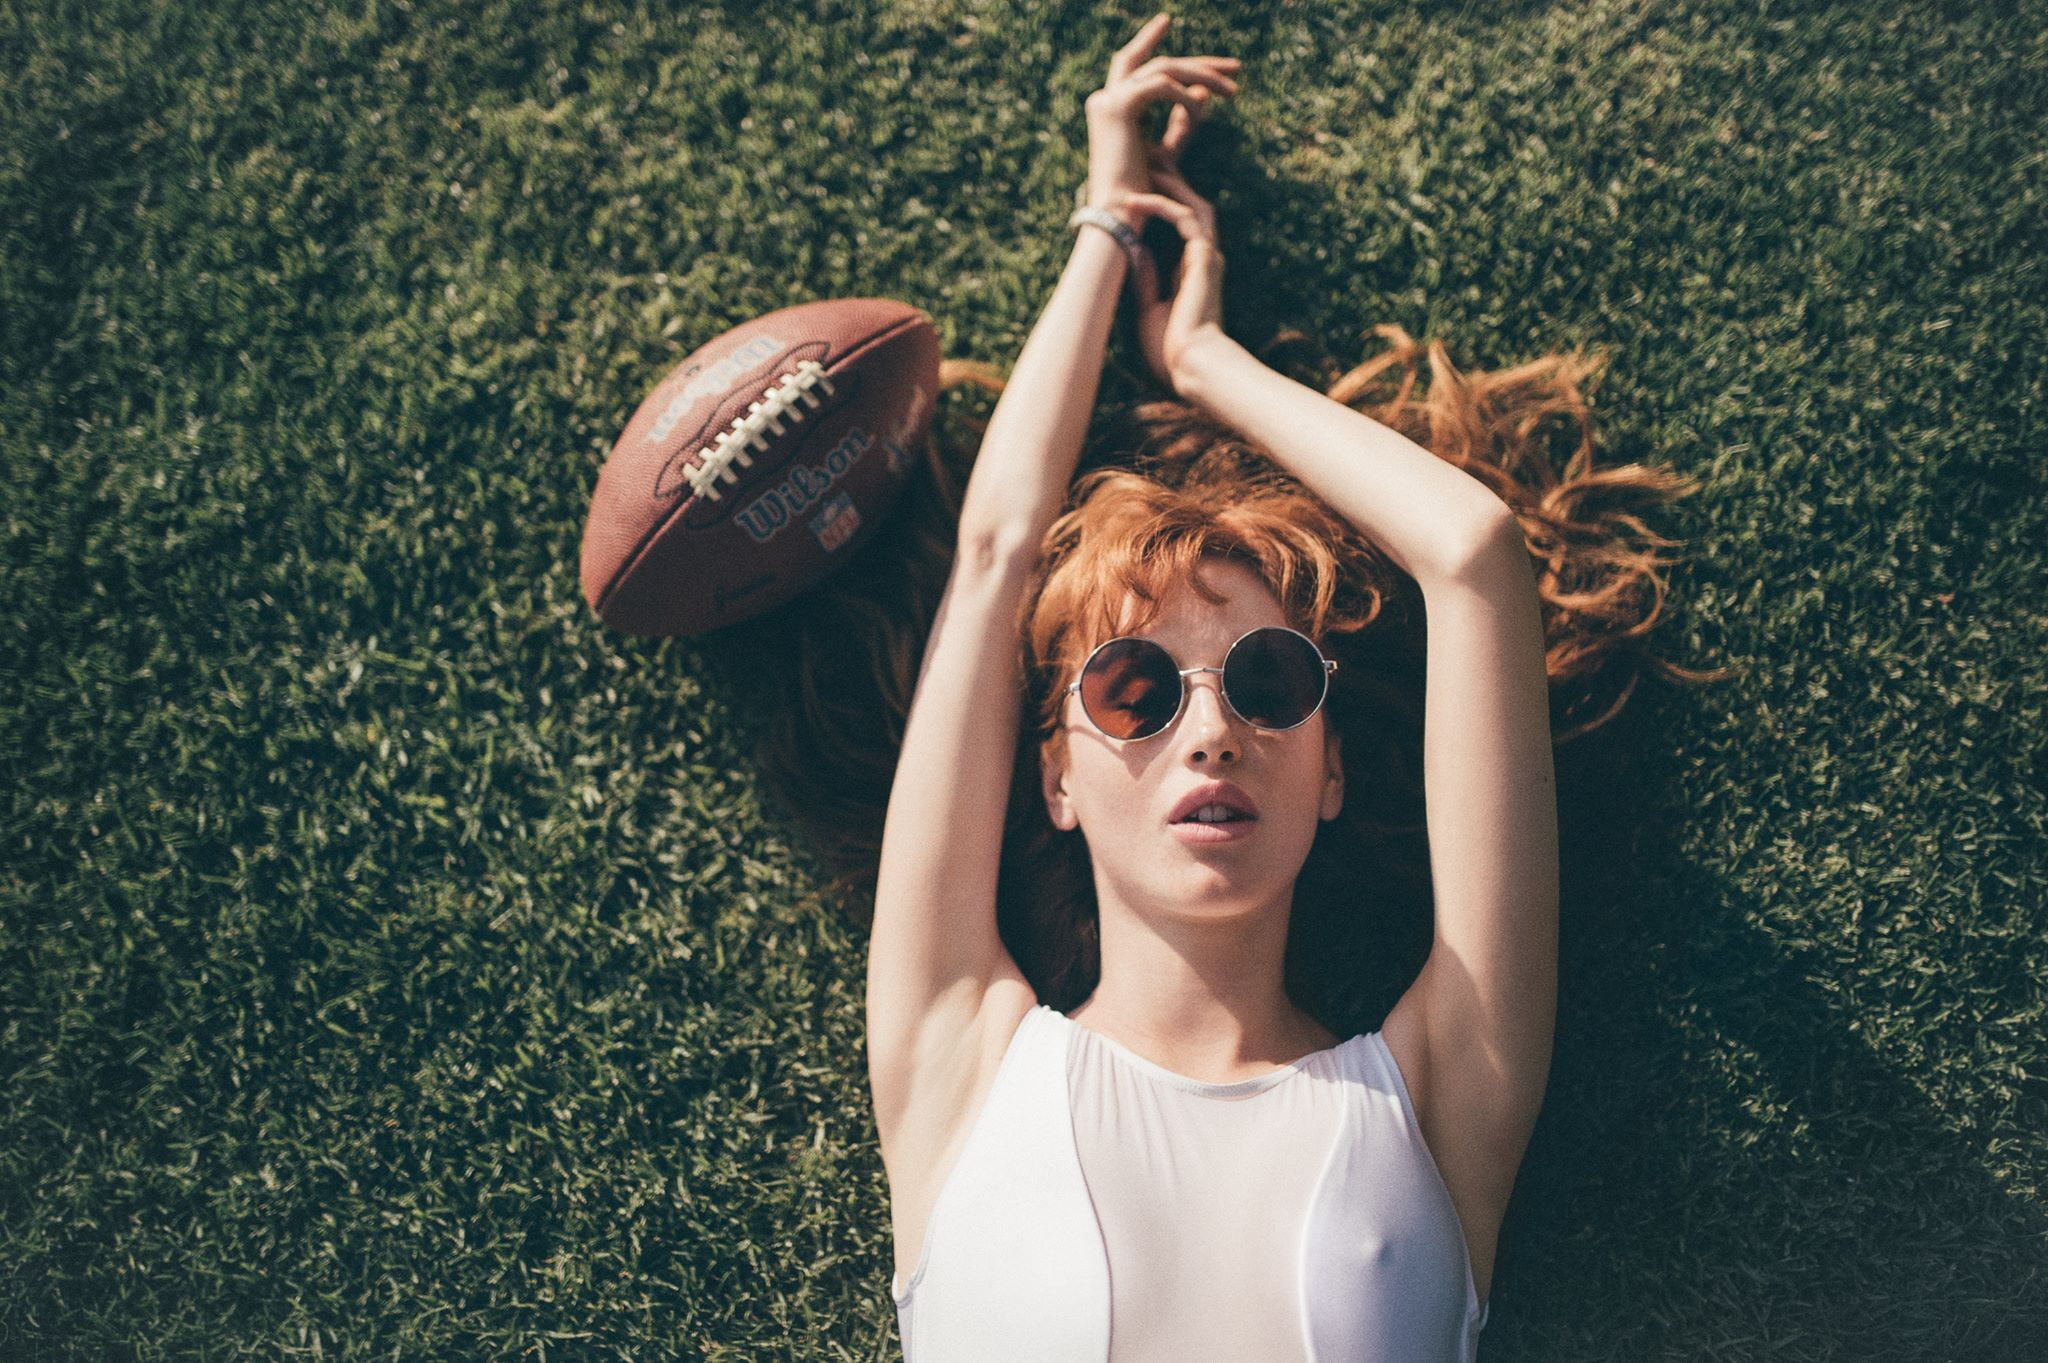 Free Download Hd Wallpaper Redhead Women American Football Sunglasses Grass Model